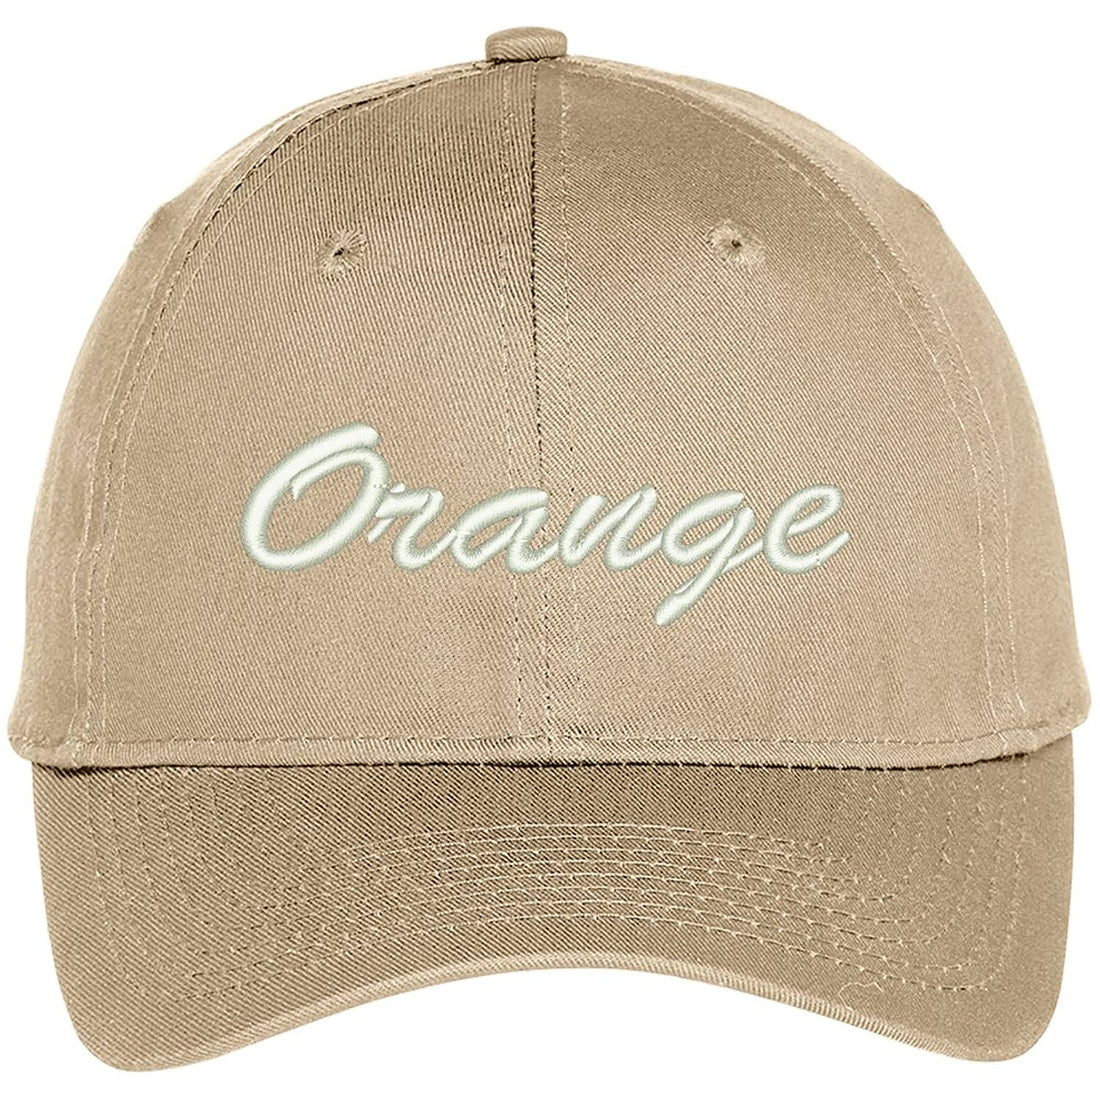 Trendy Apparel Shop Orange Embroidered Team Nickname Mascot Cap